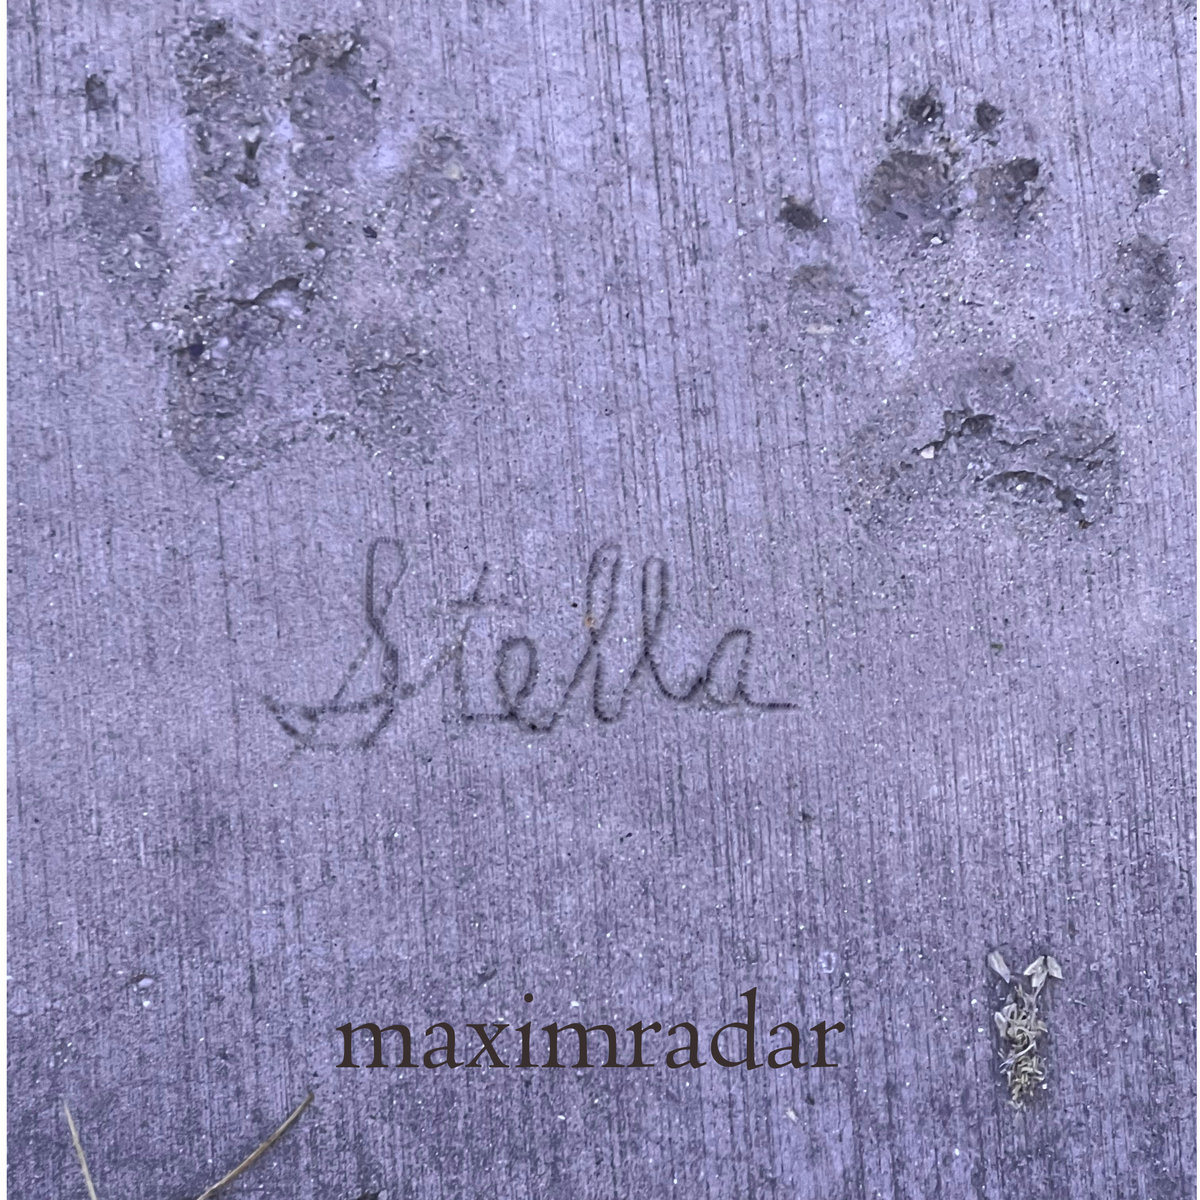 maximradar | Stella | Self-Released